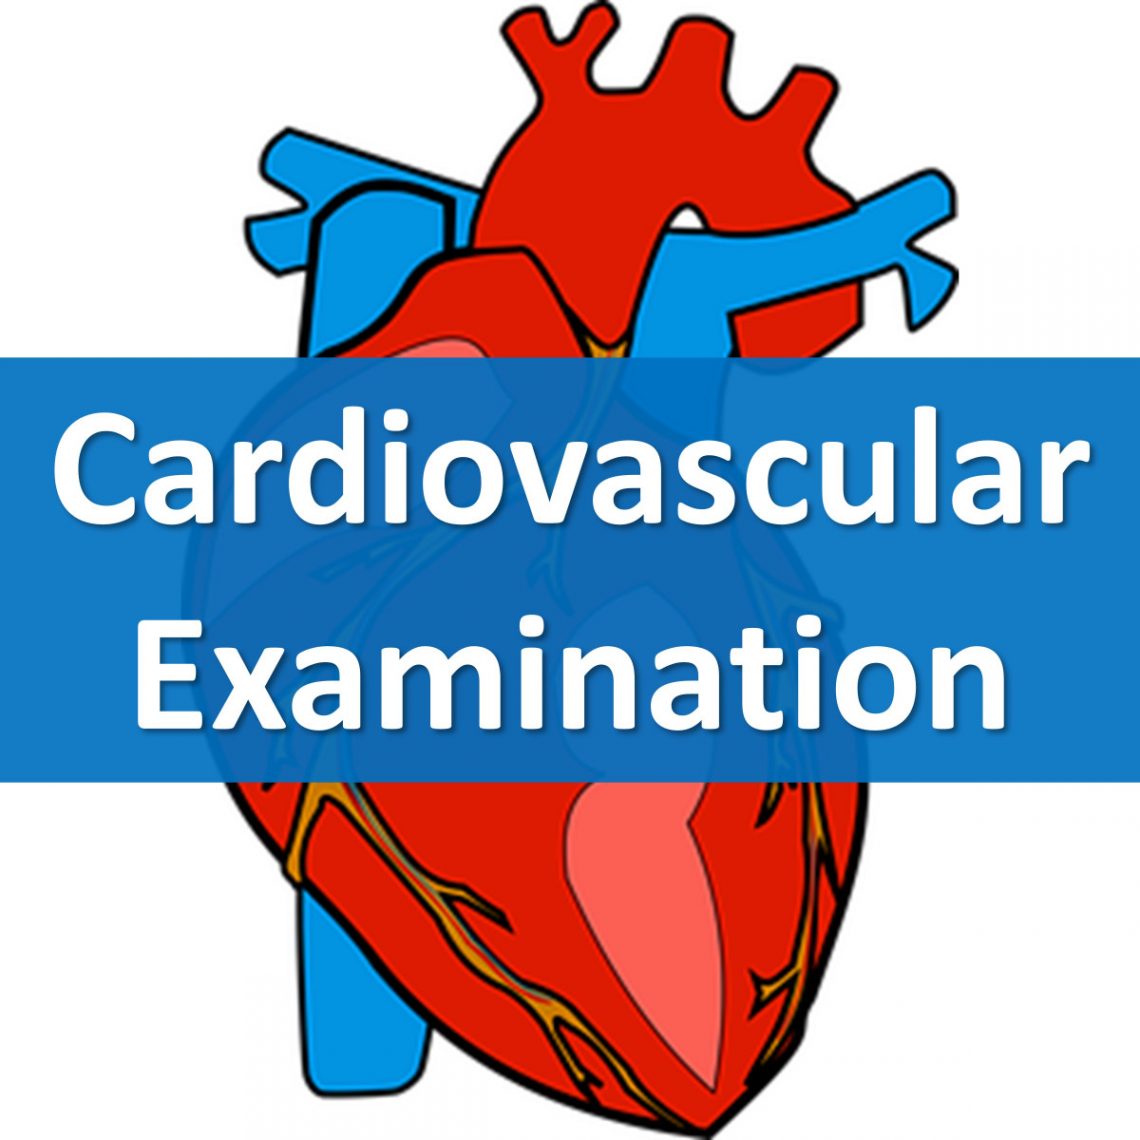 Cardiovascular Examination in Thailand